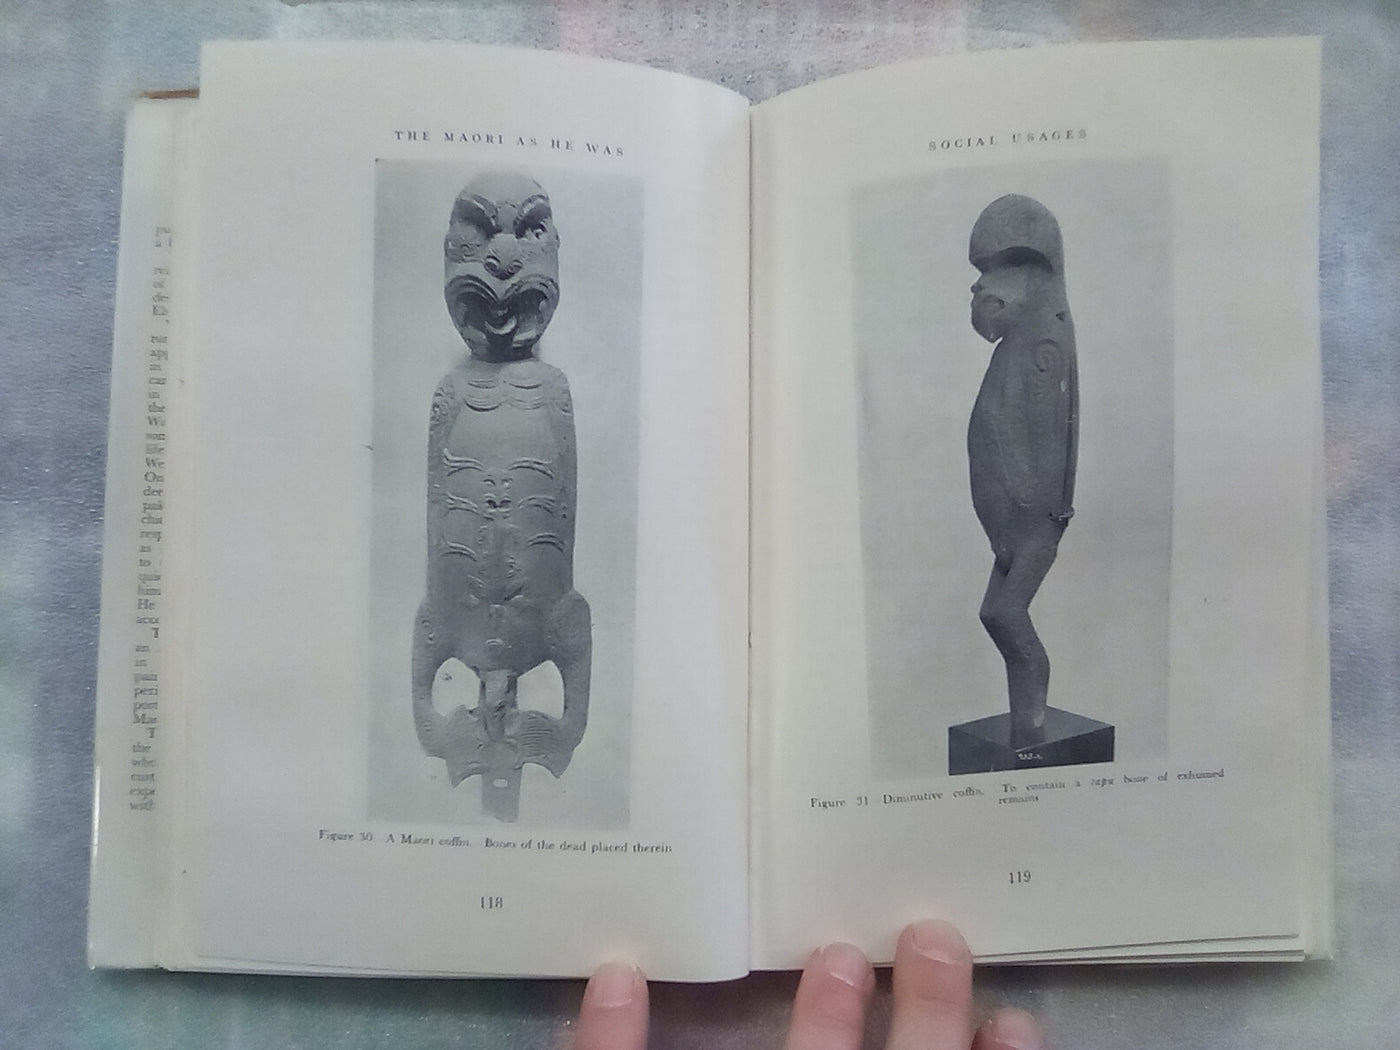 The Māori as He Was (1952) by Elsdon Best